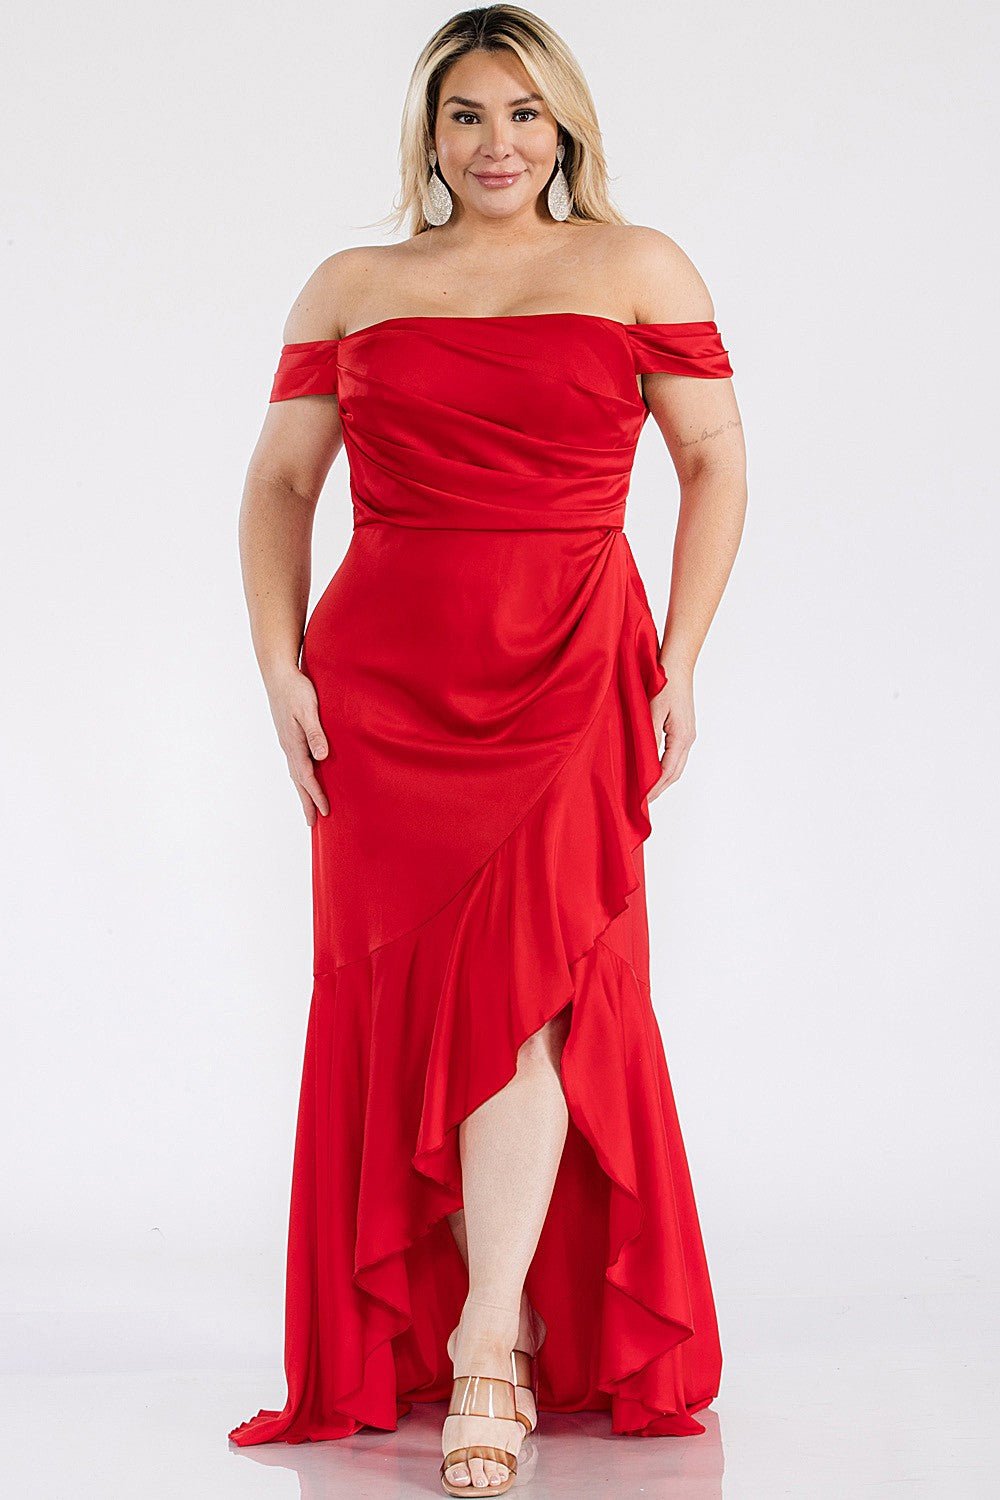 Sara - rojo - Cindel vestidos maxi, midi, mini, para toda ocasion, largos, de fiesta, de boda